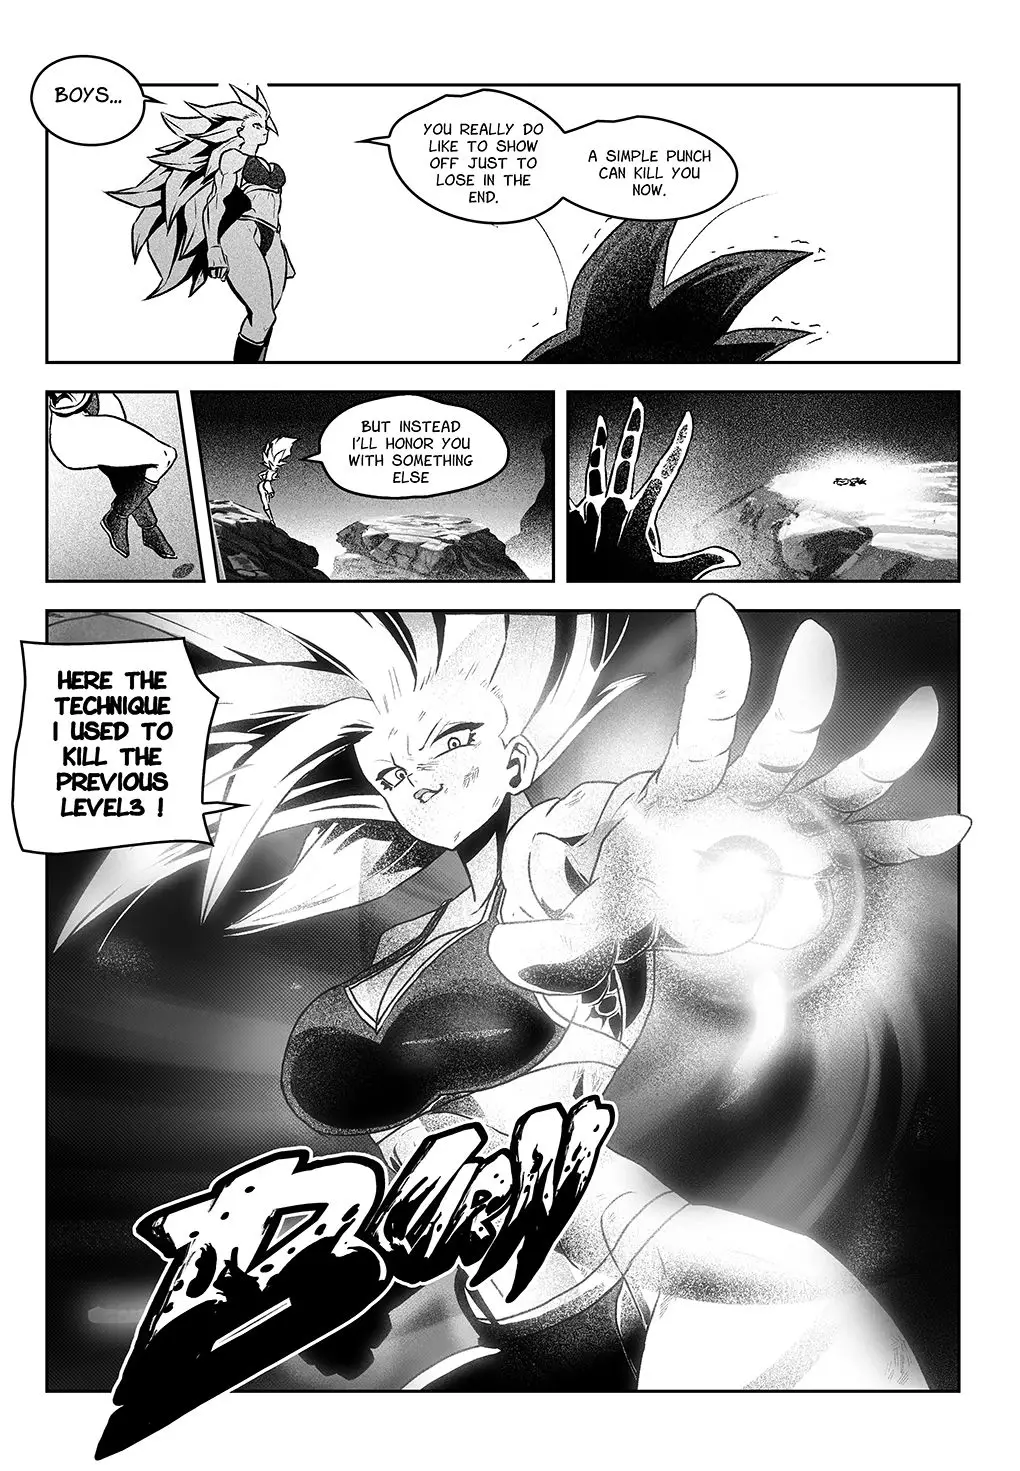 Dragon Ball Shippuden - 10 page 9-23b05e68